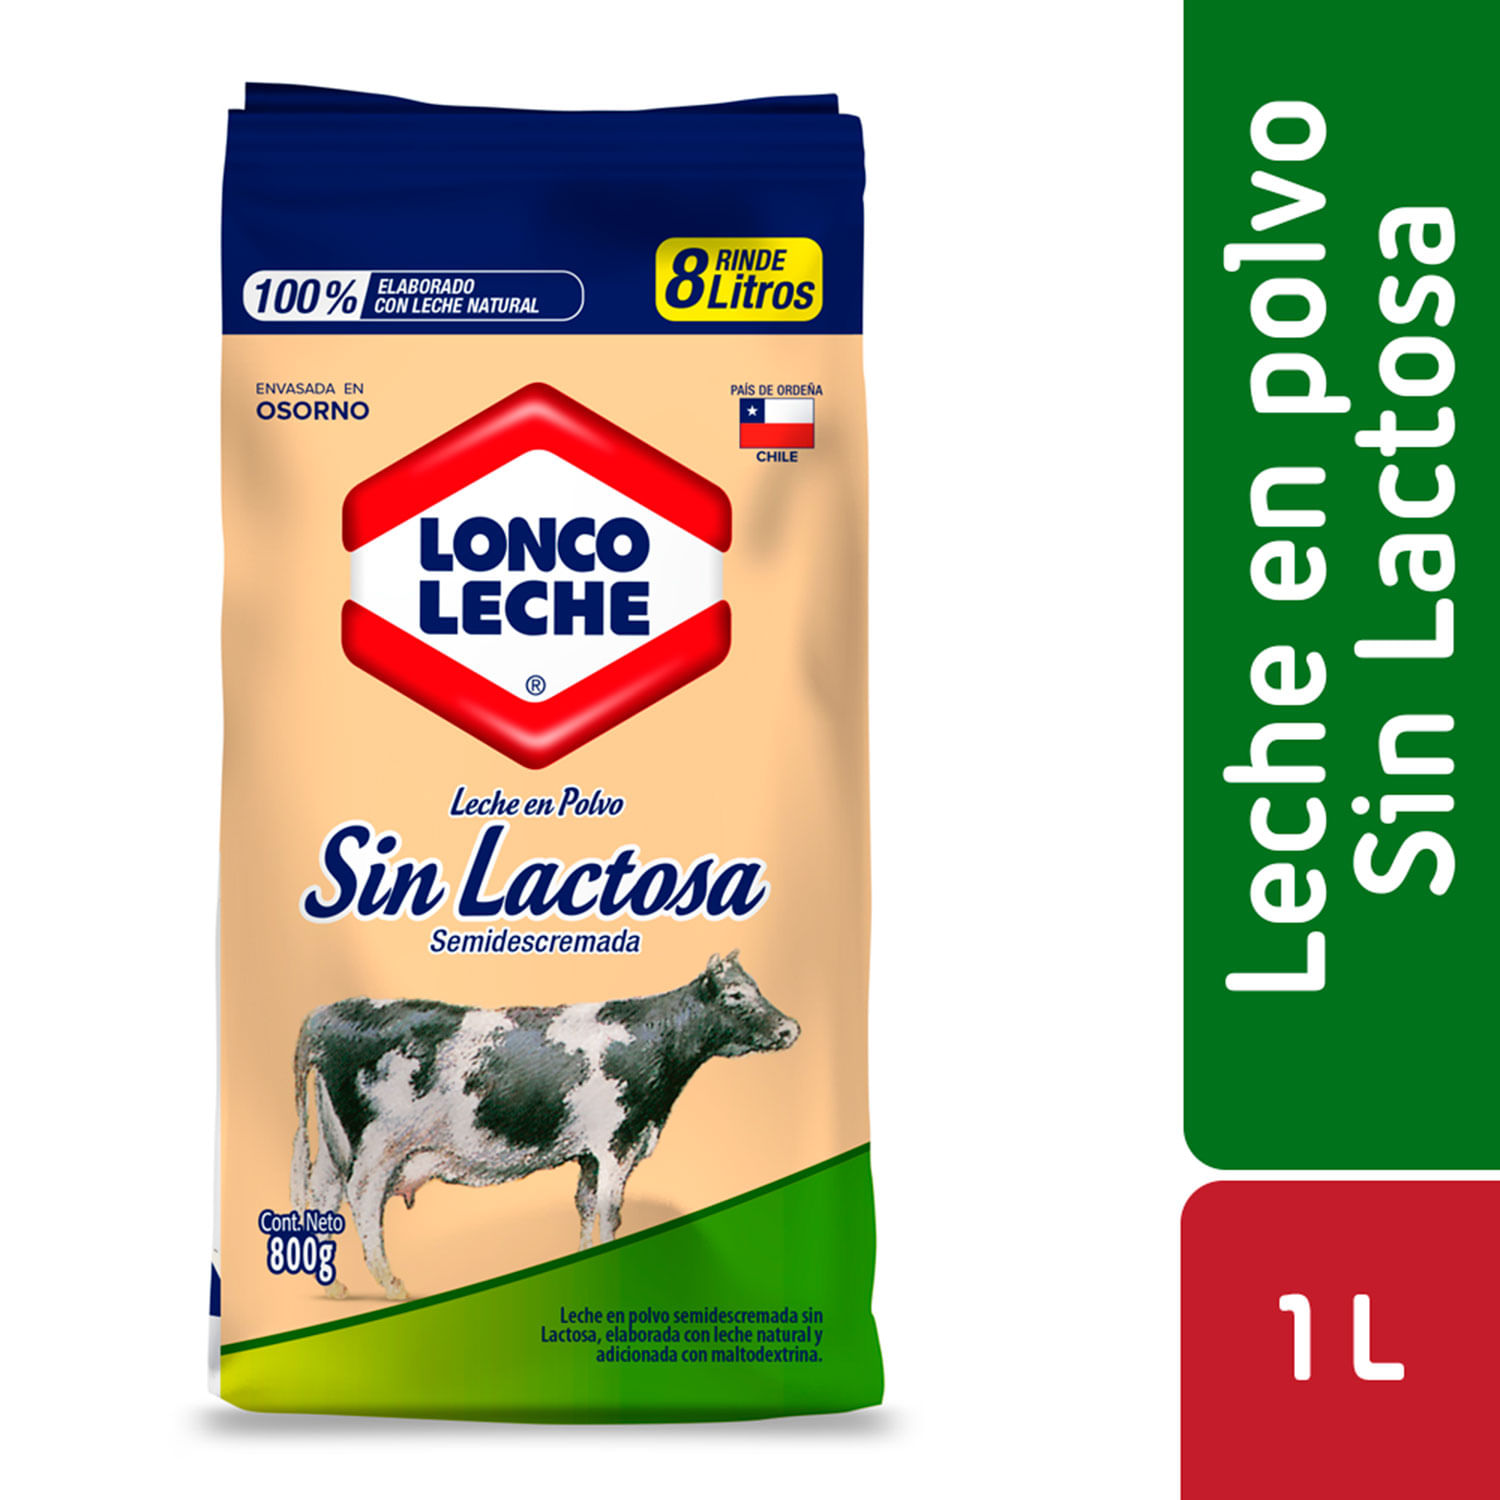 Productos sin lactosa con leche de pastoreo